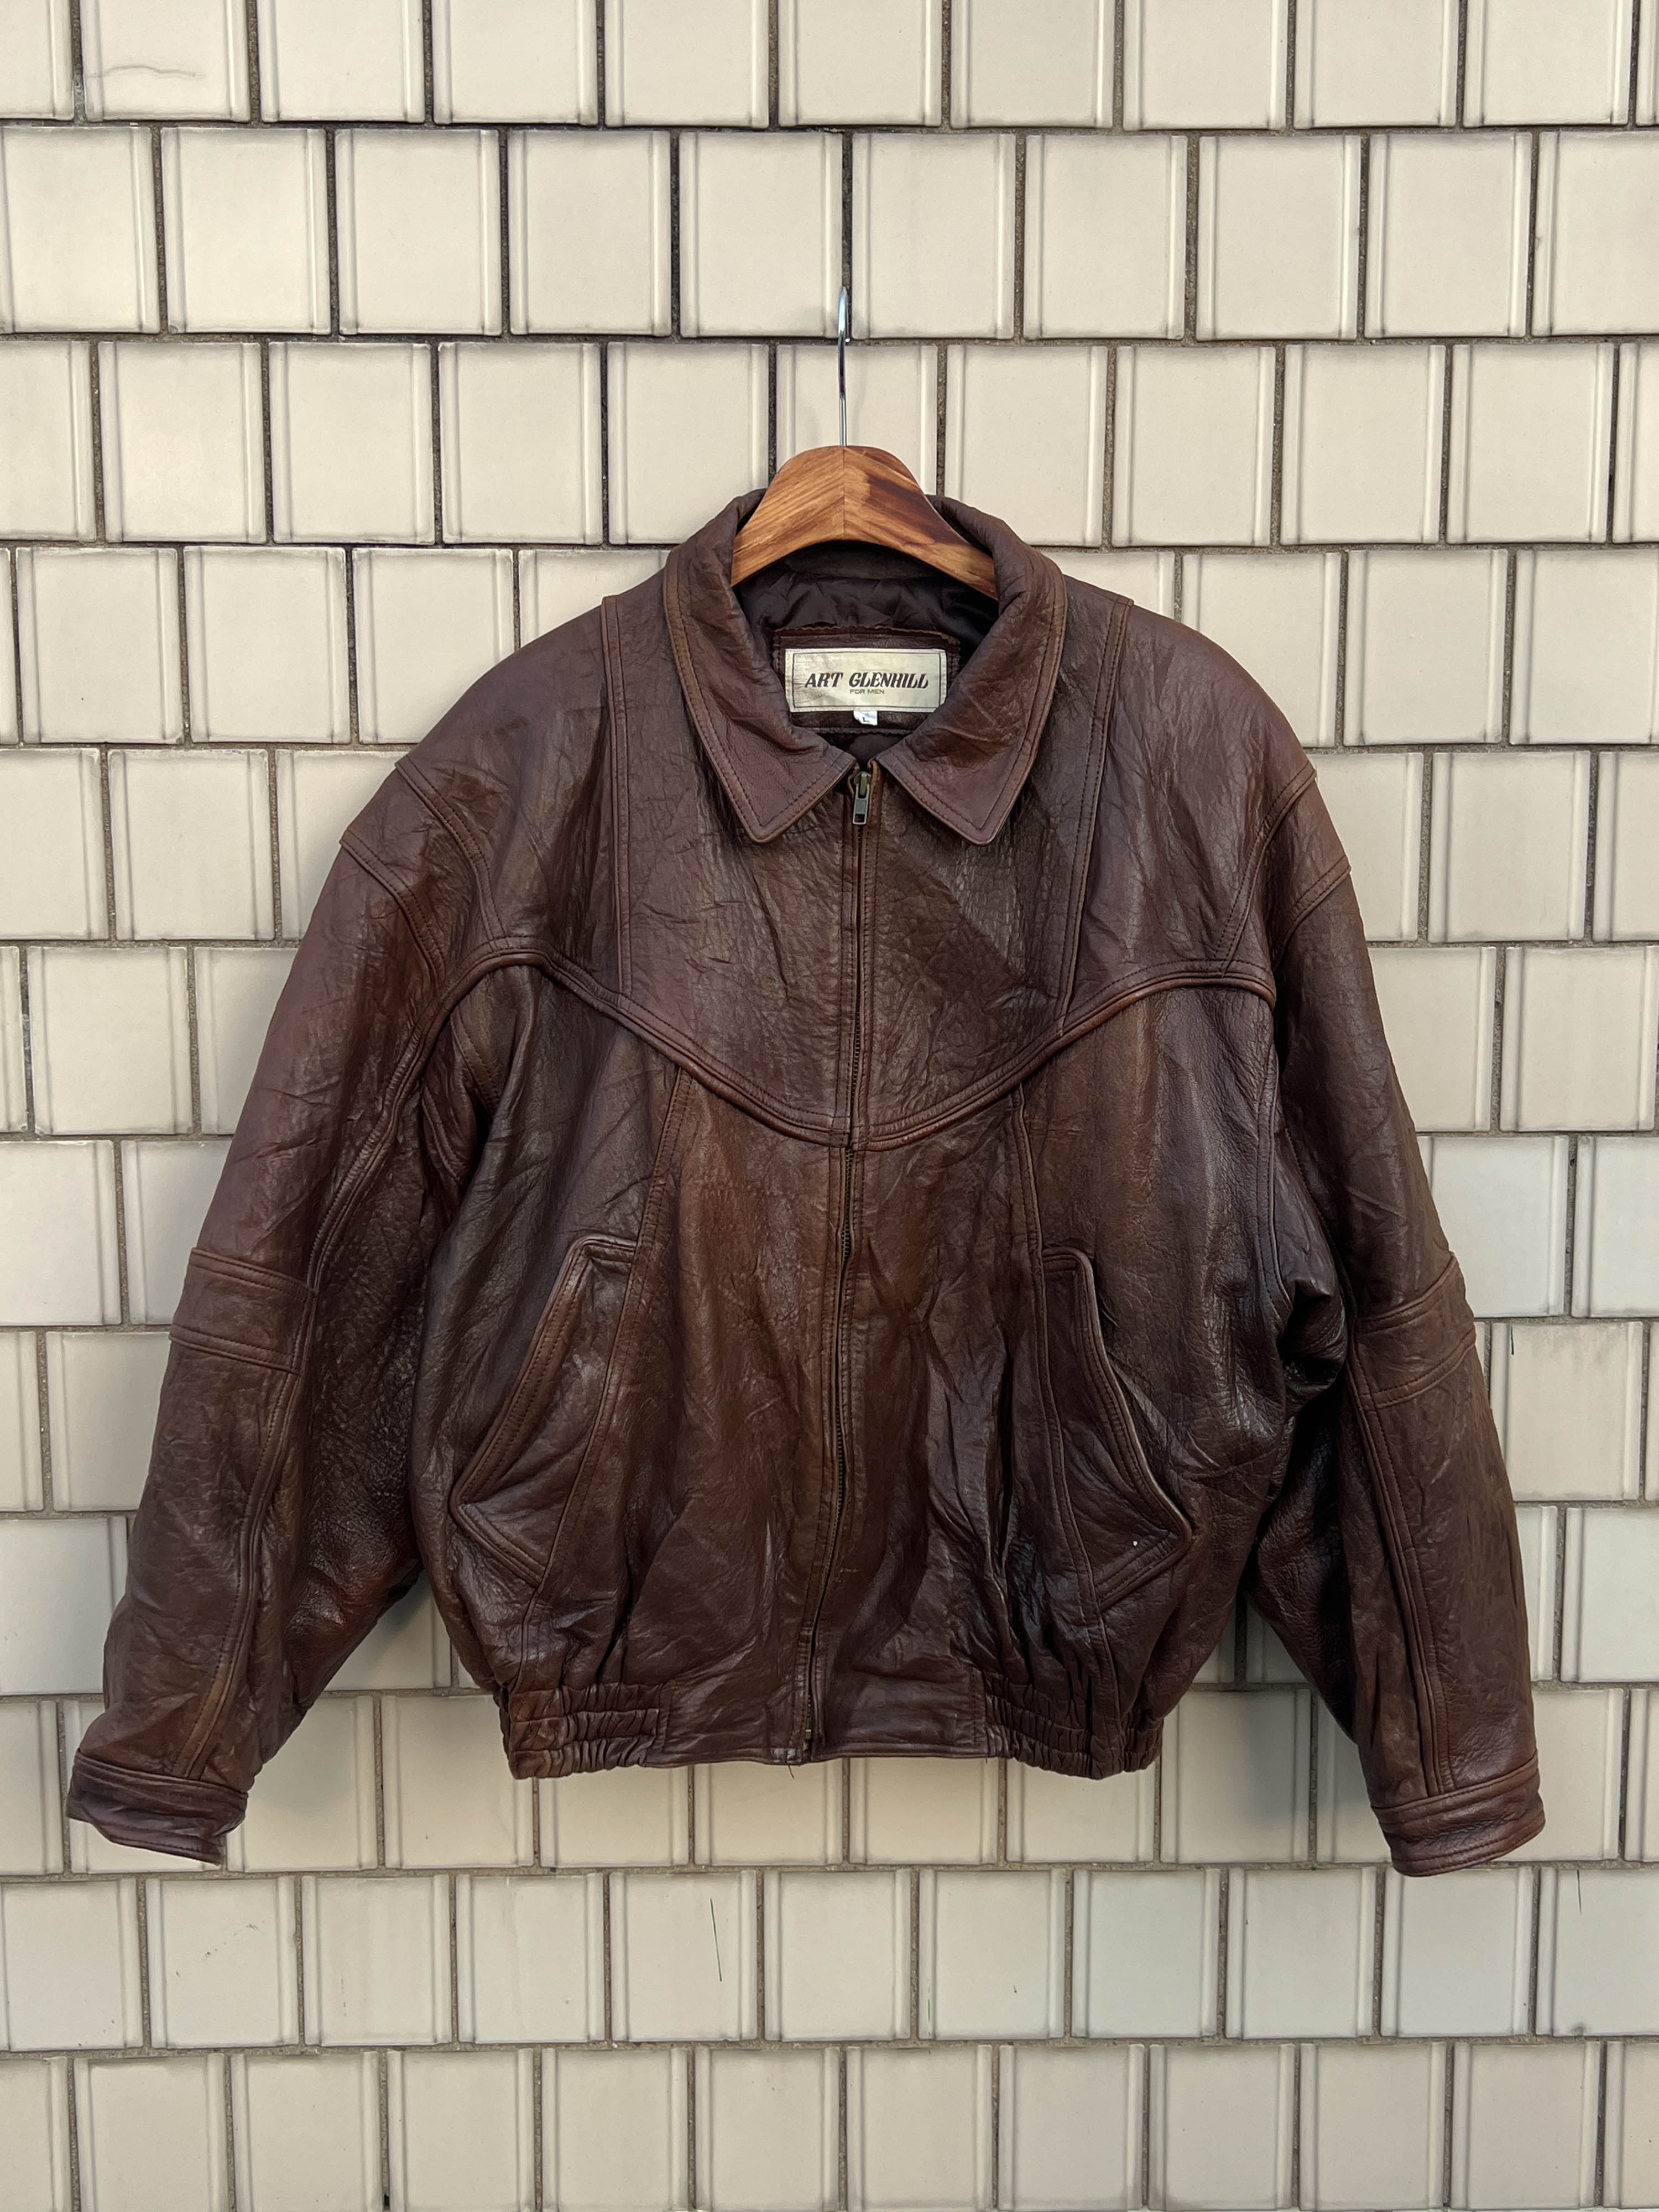 ART GRENHILL leather jacket